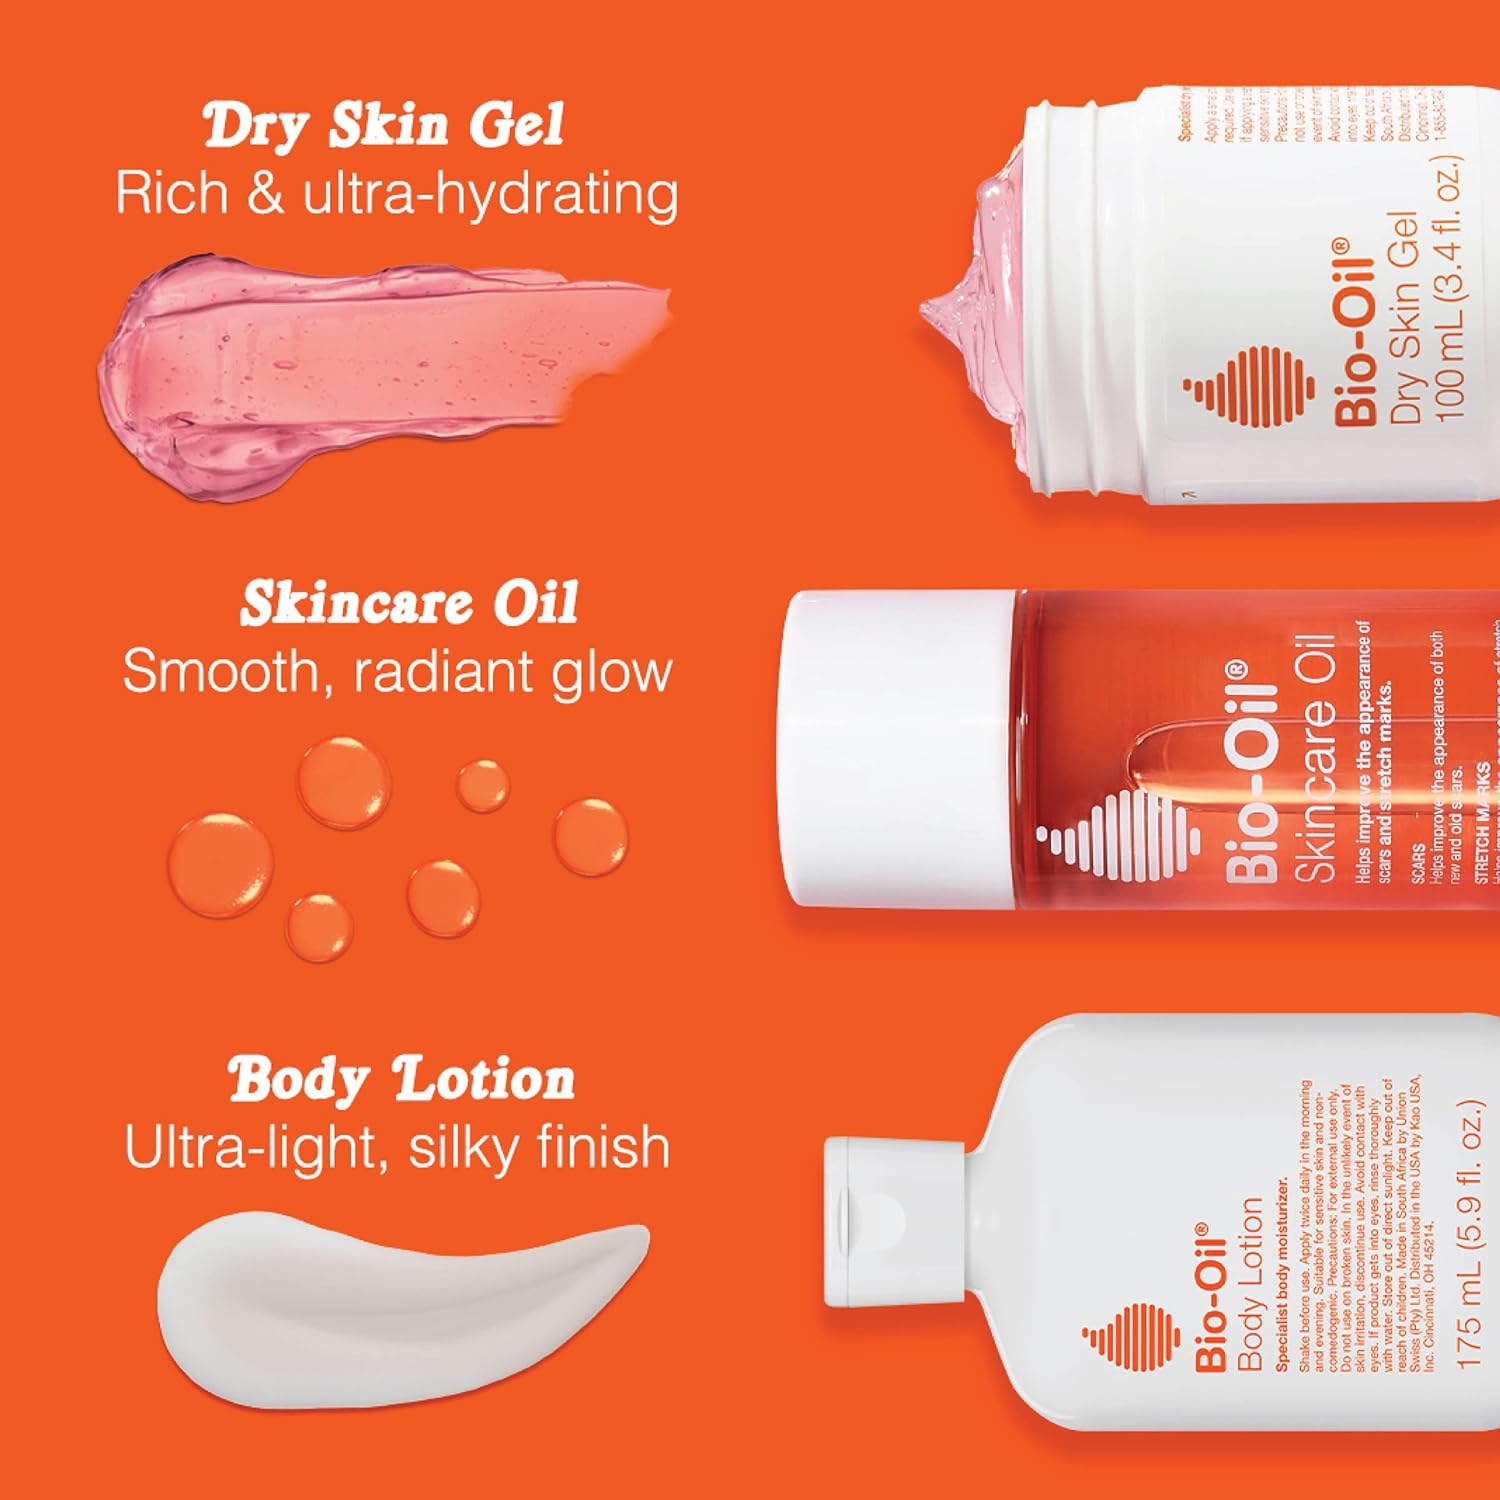 Bio-Oil Skincare Body Oil, Vitamin E, Serum for Scars  Stretchmarks, Face  Body Moisturizer, 2 oz, All Skin Types